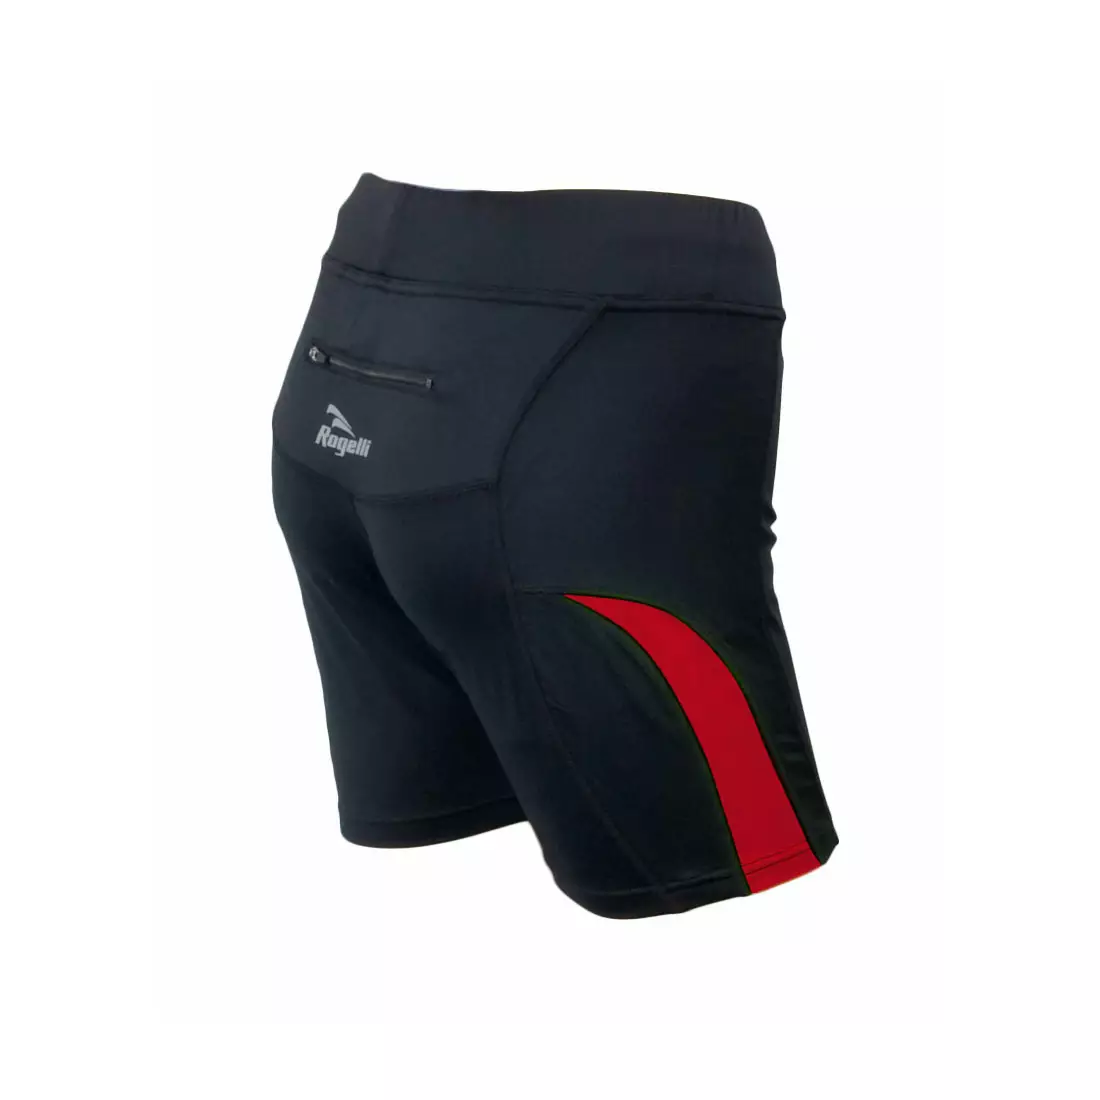 ROGELLI  RUN  EDIA - Damen Sporthose, Farbe: Schwarz-Rot